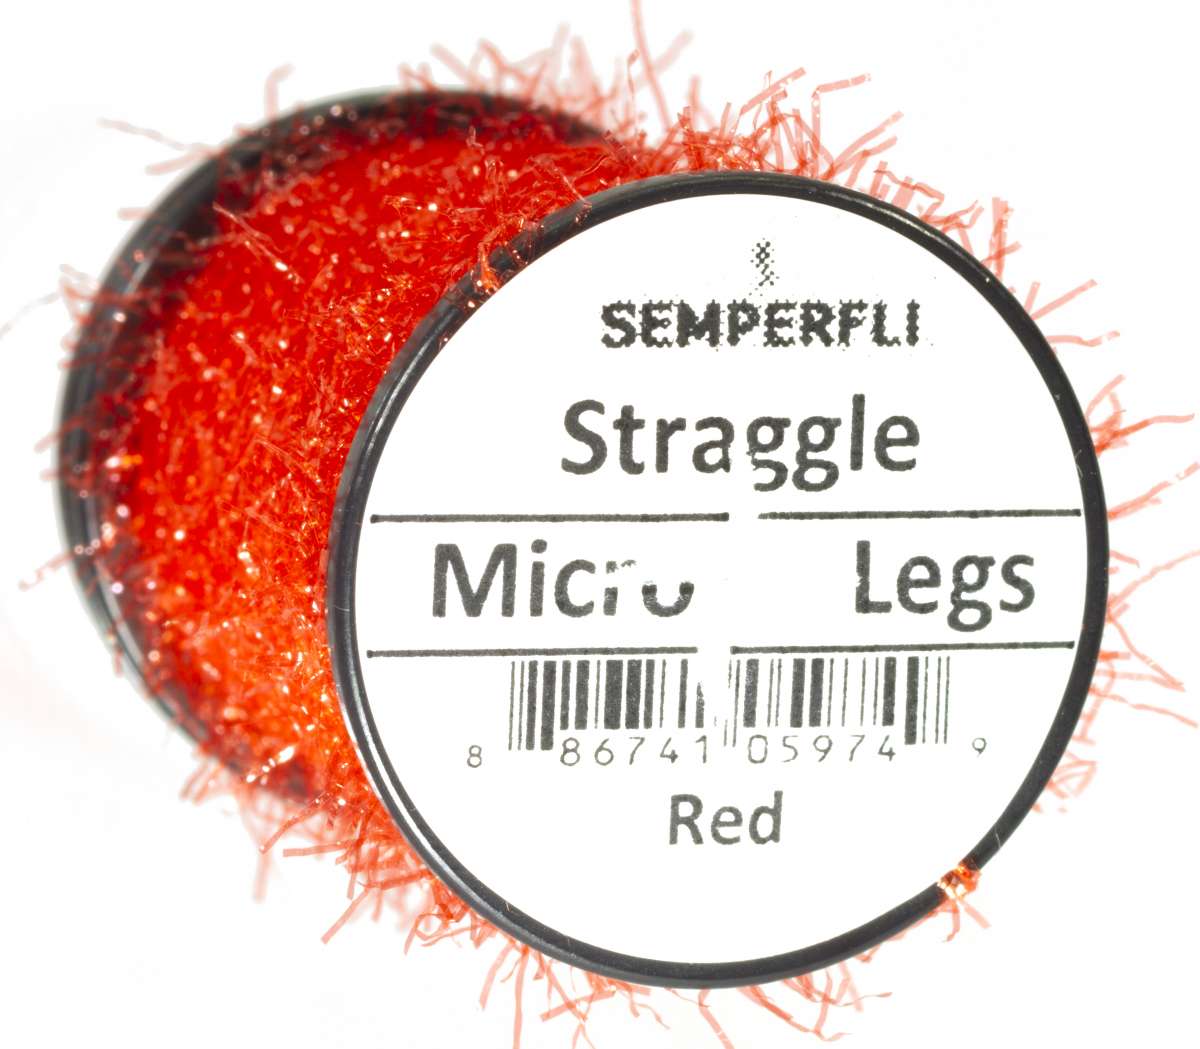 Straggle Legs Sem-0200-re